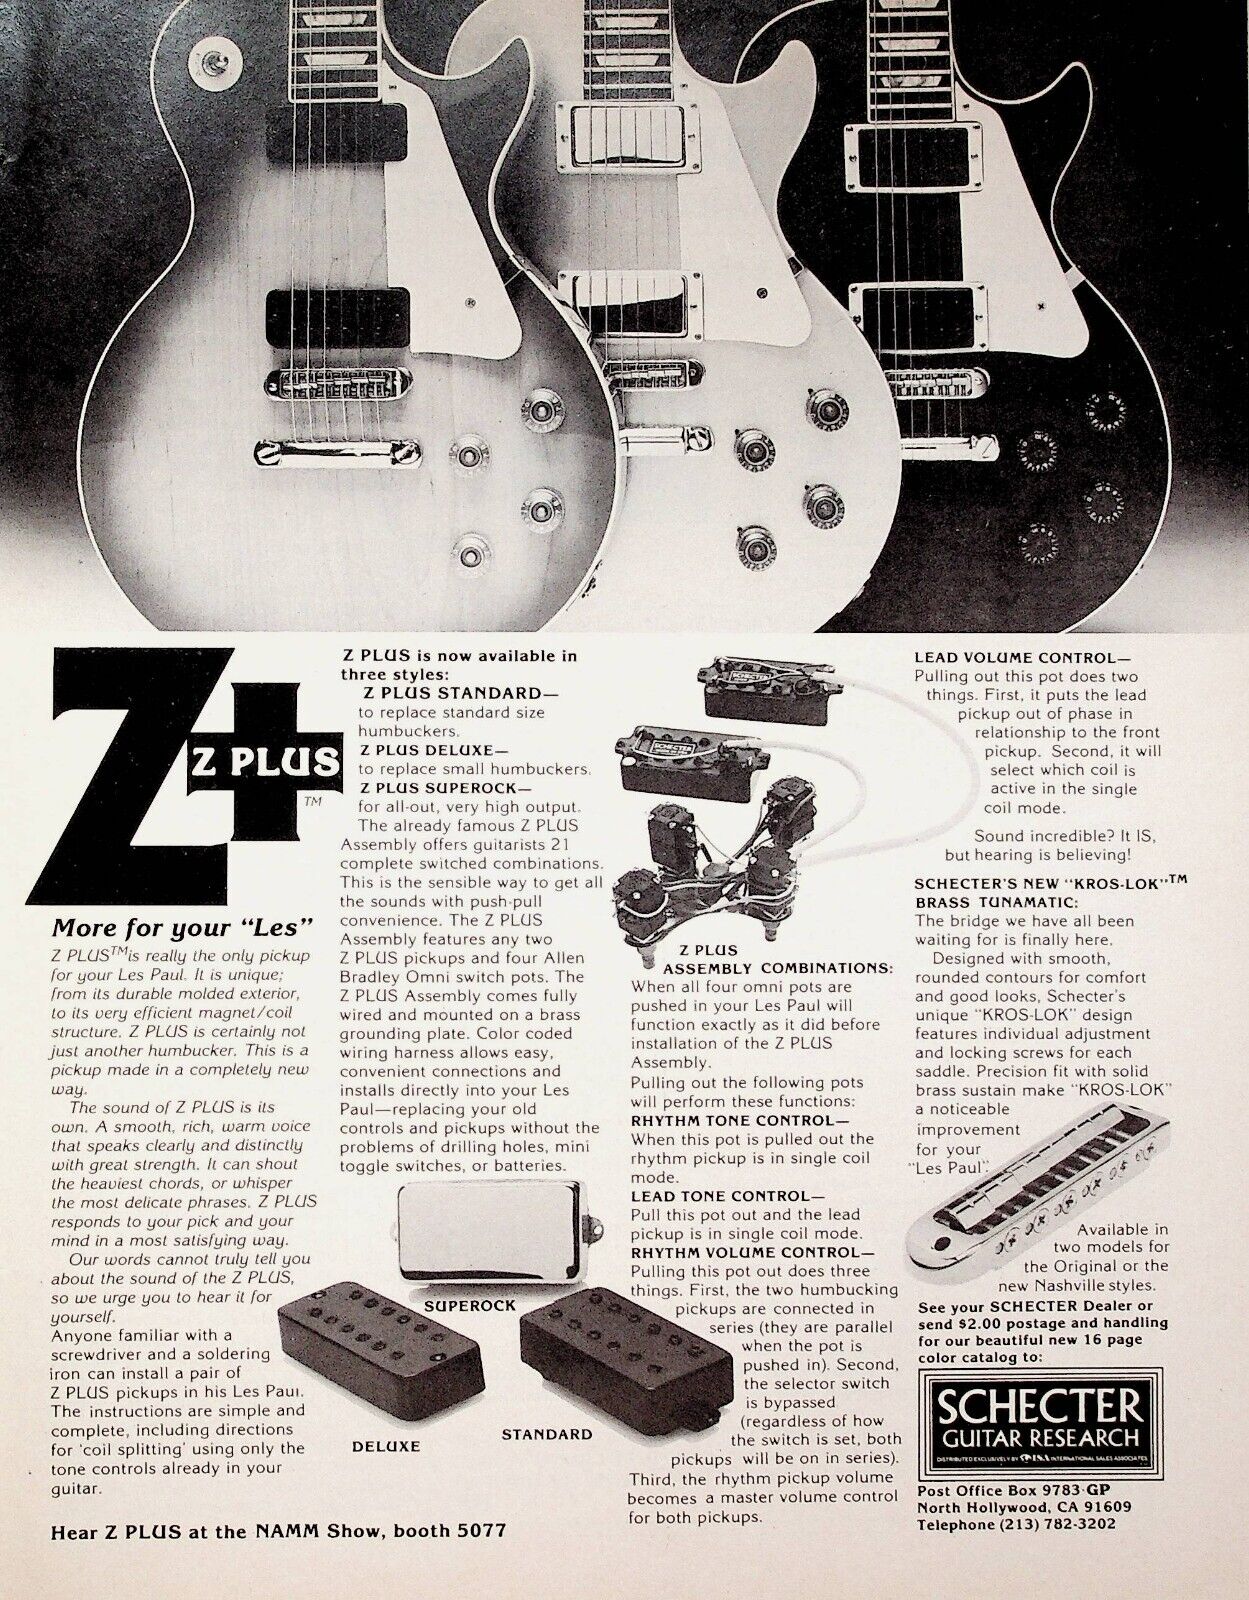 1979 Schecter Guitar Research Z Plus Humbucker Pickup - Vintage Ad